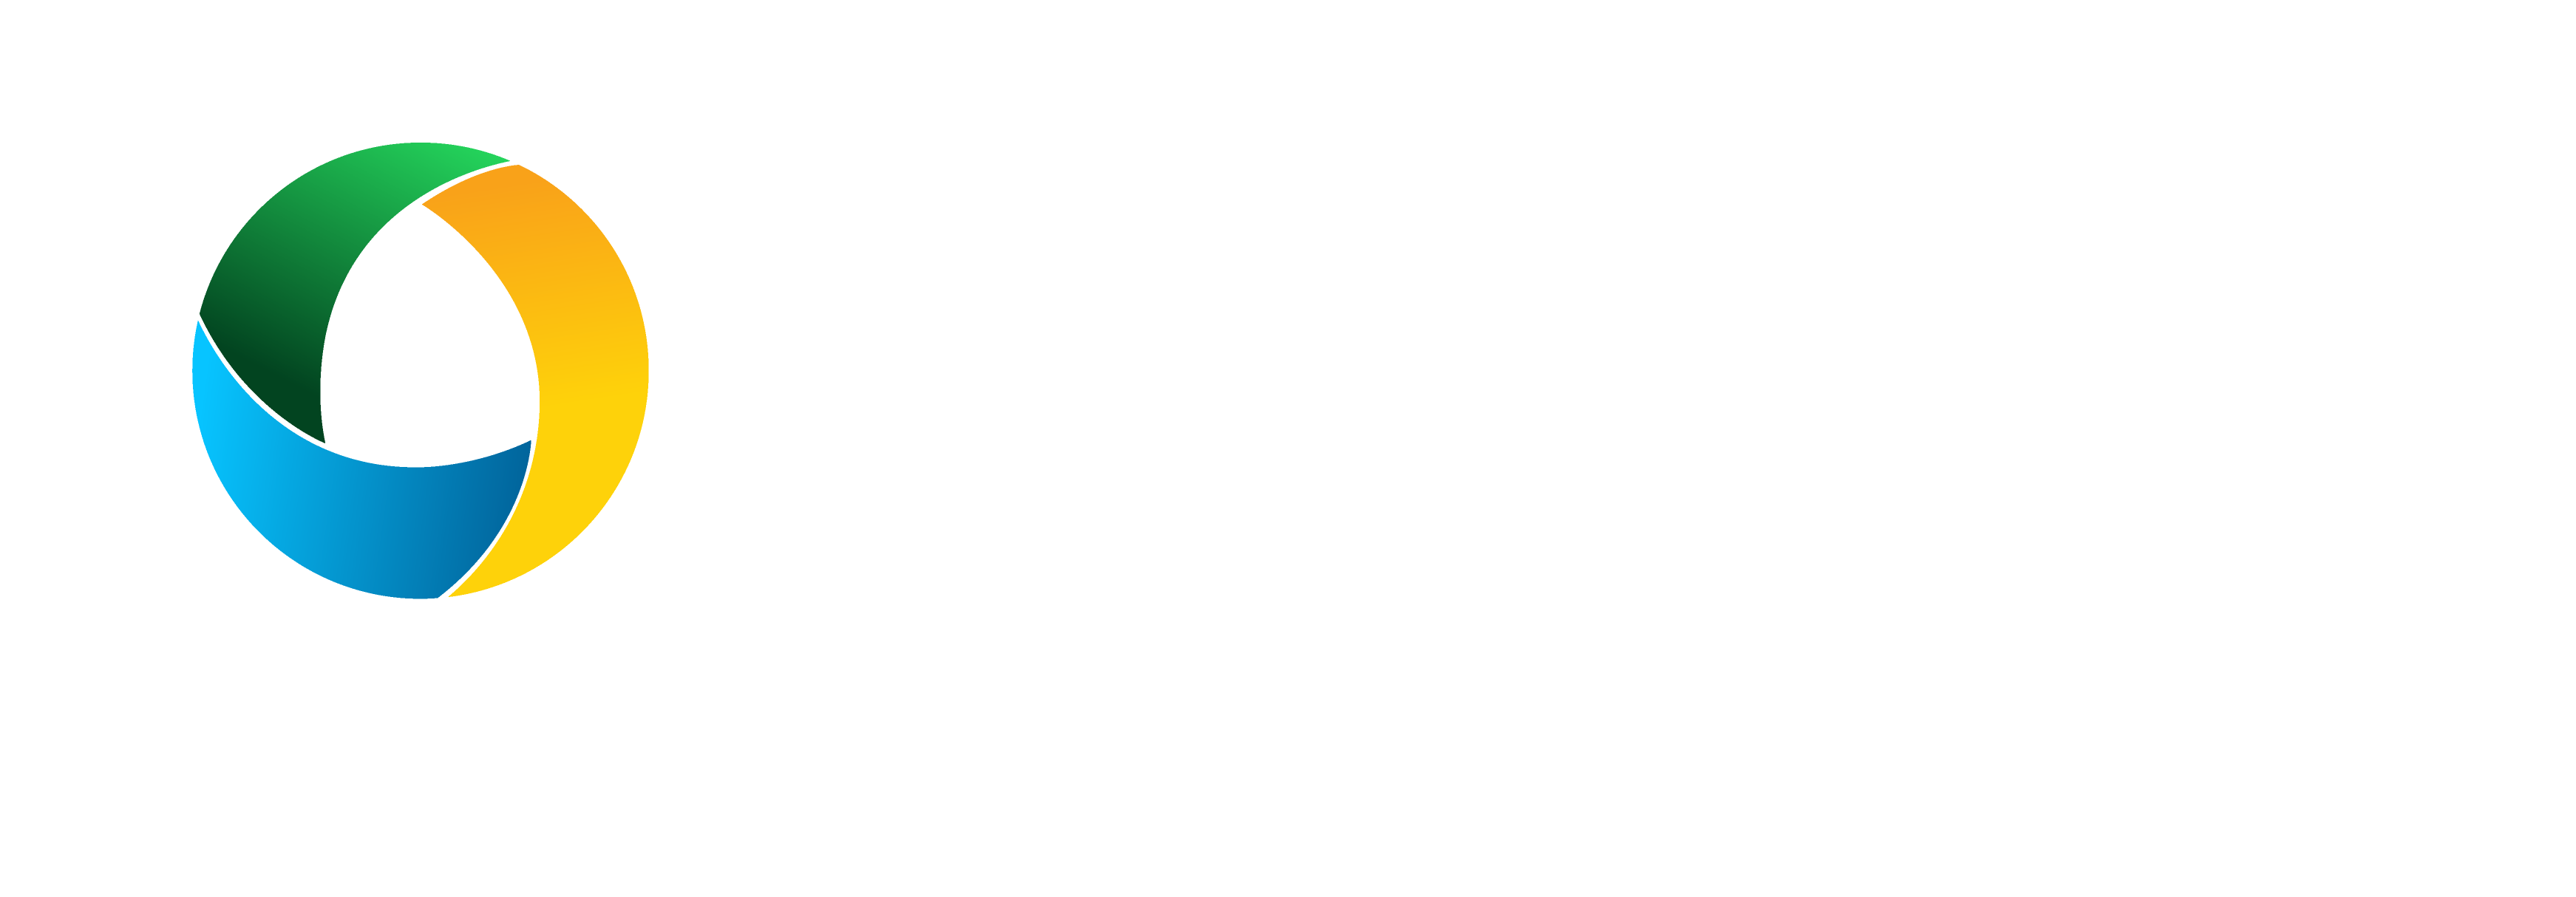 Sustainability Core Advisors 